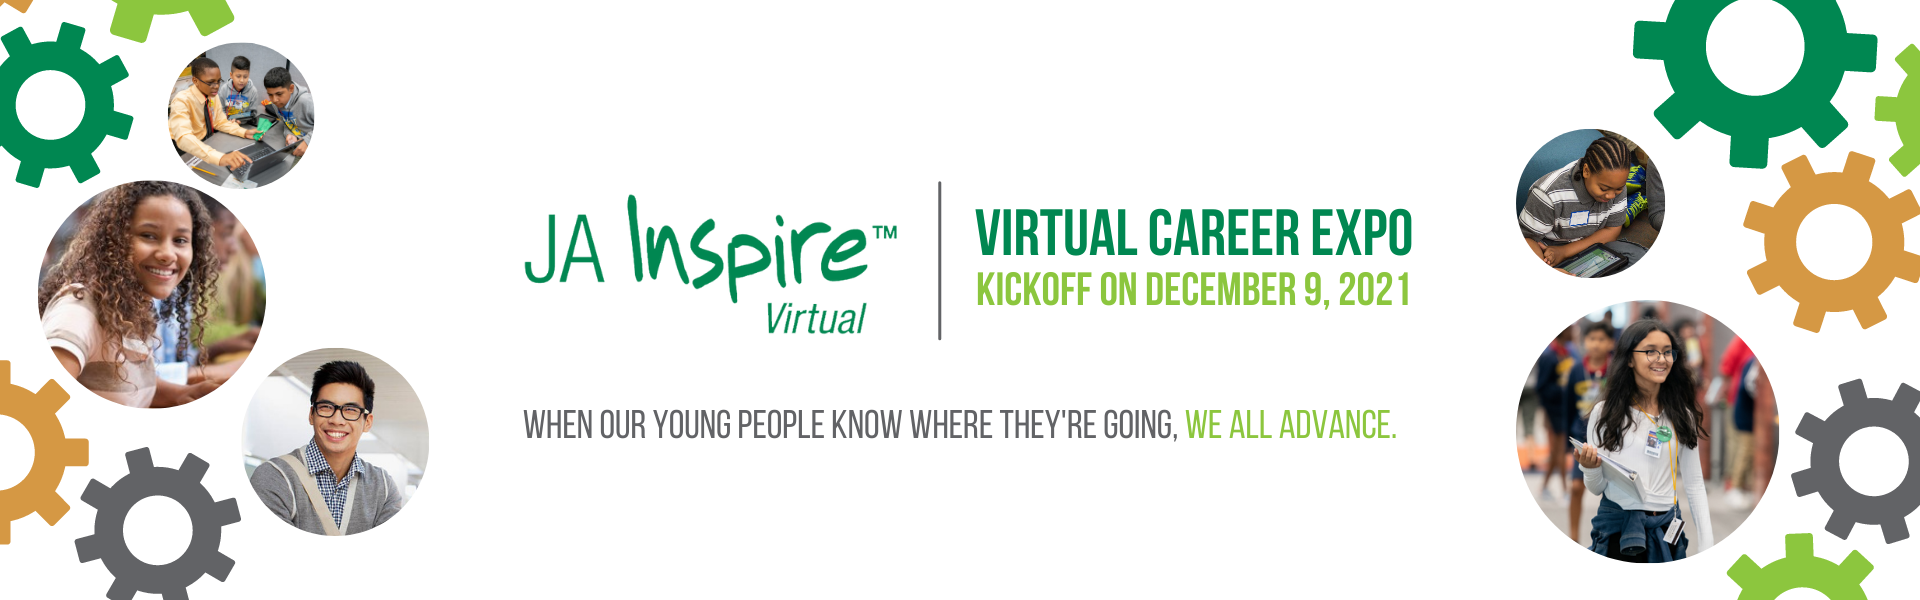 Virtual career expo banner